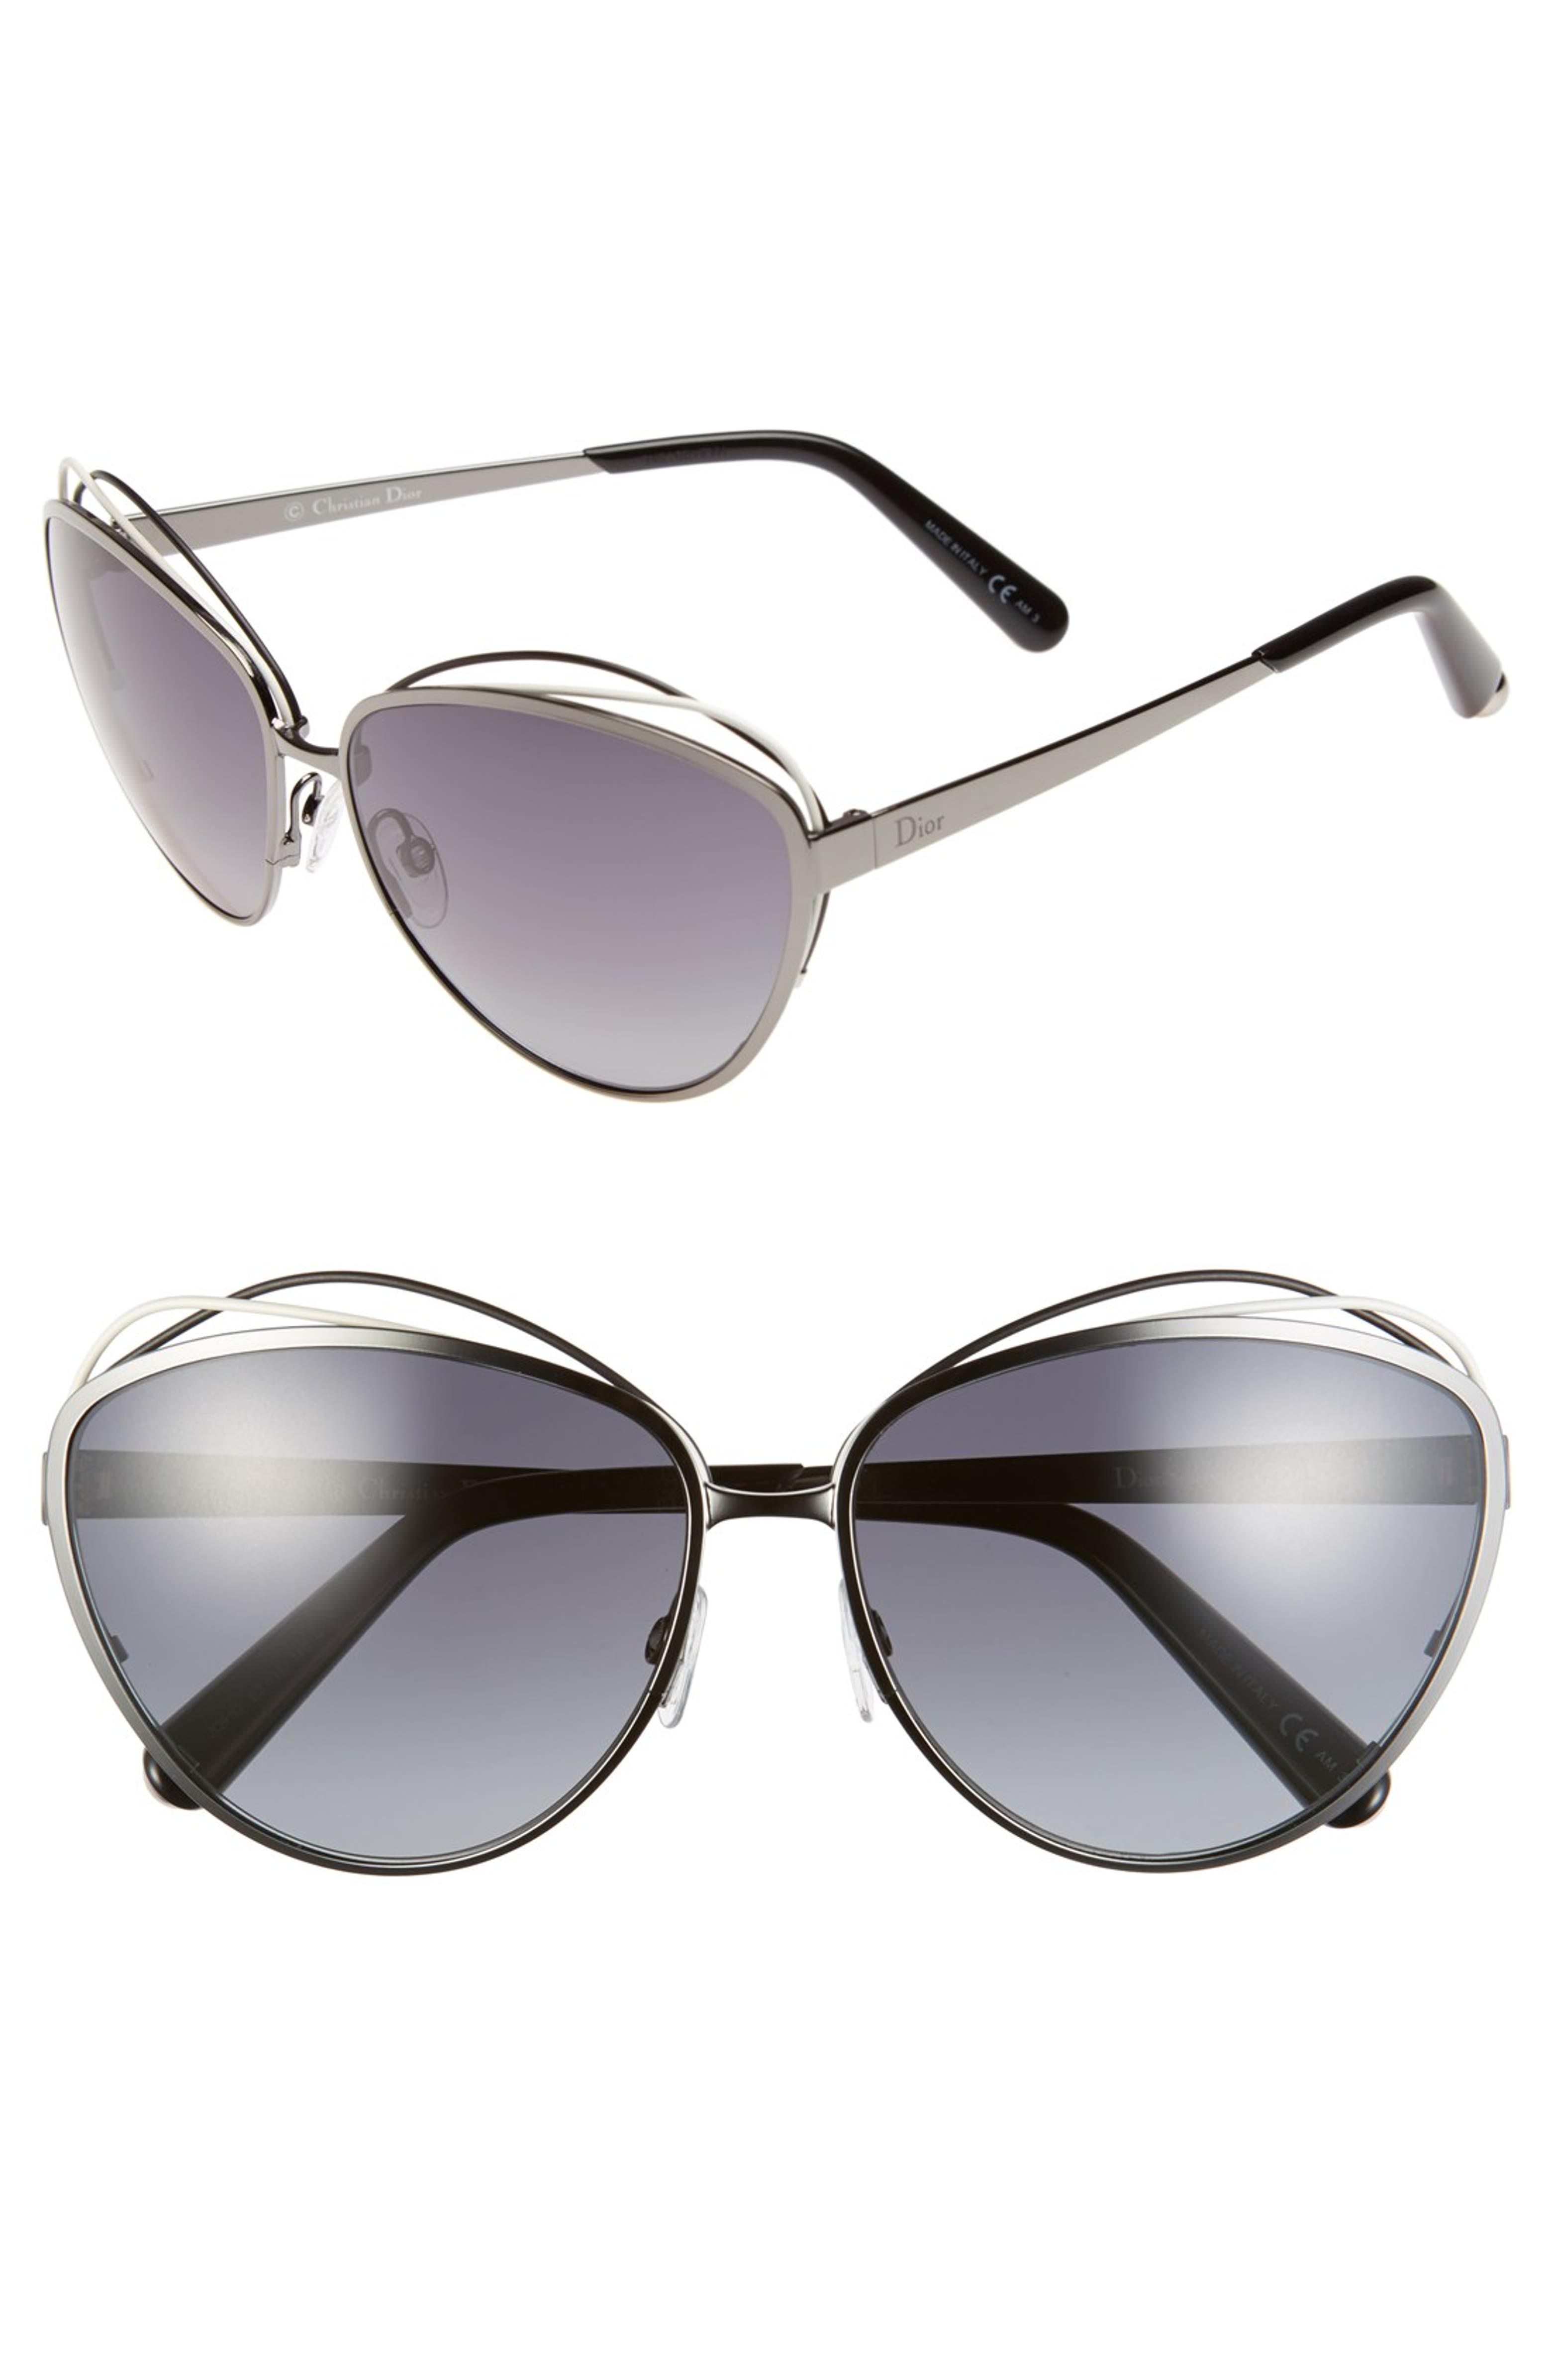 Dior 62mm Retro Sunglasses | Nordstrom